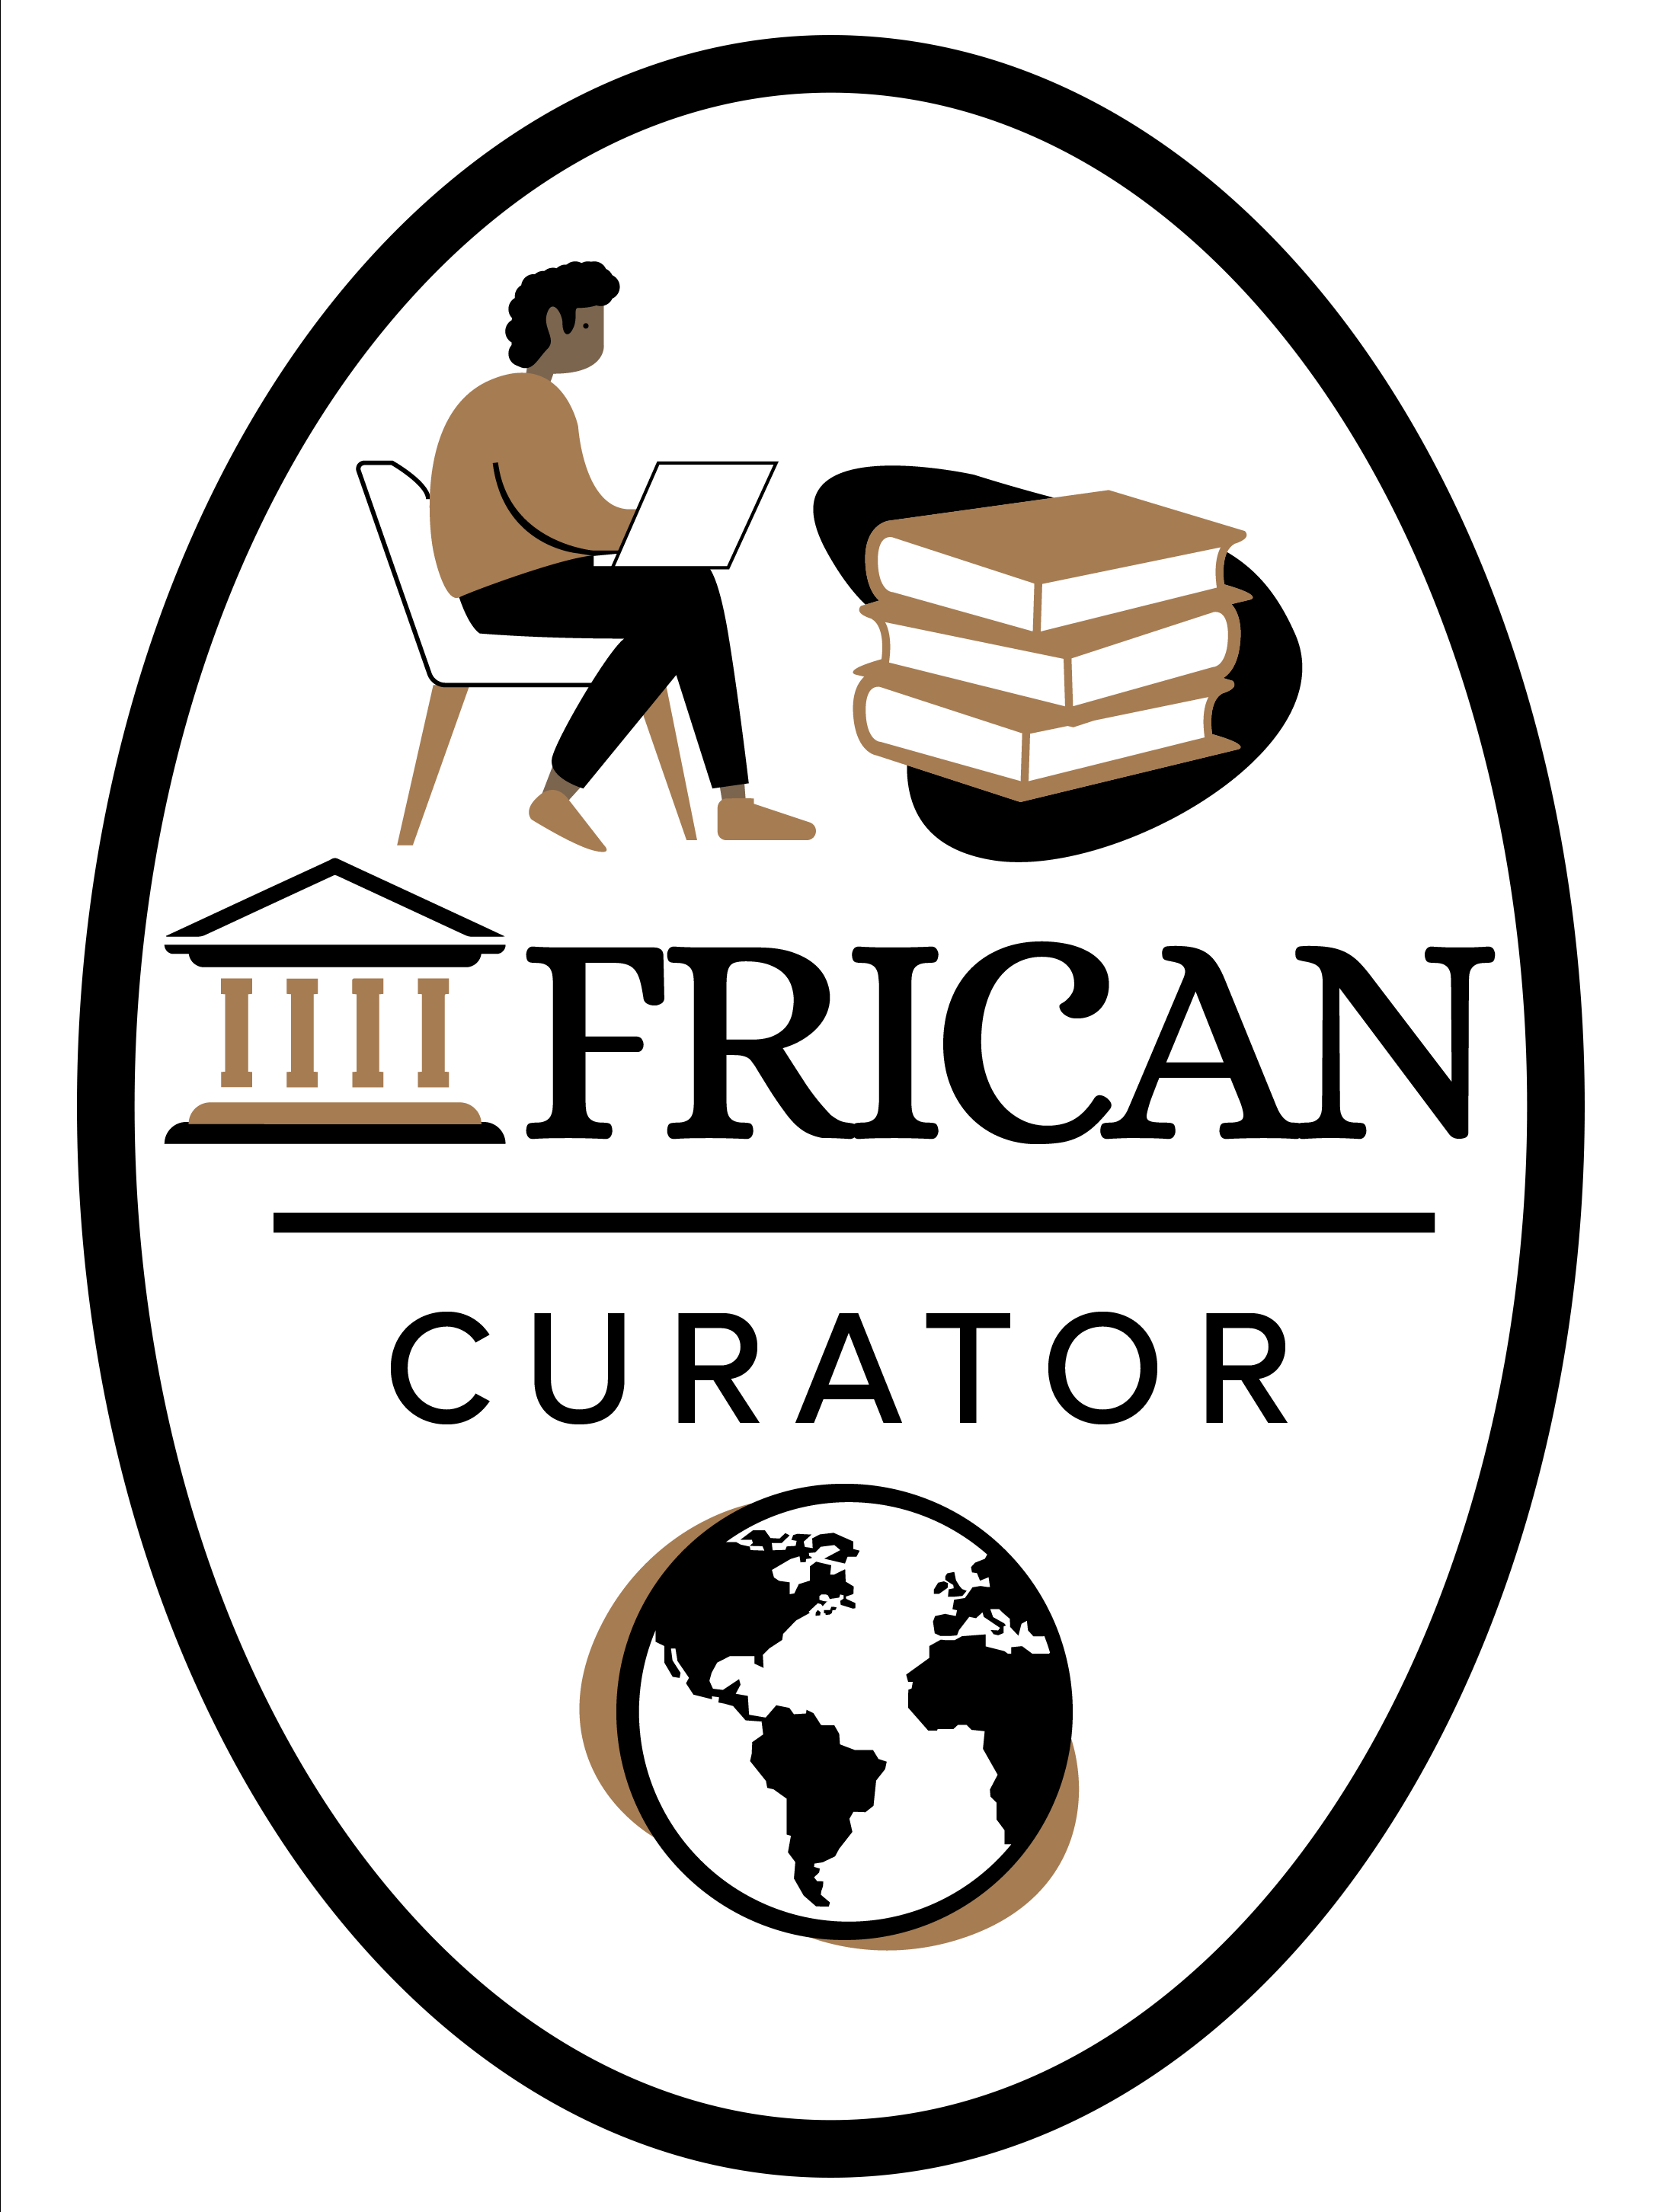 African Curator